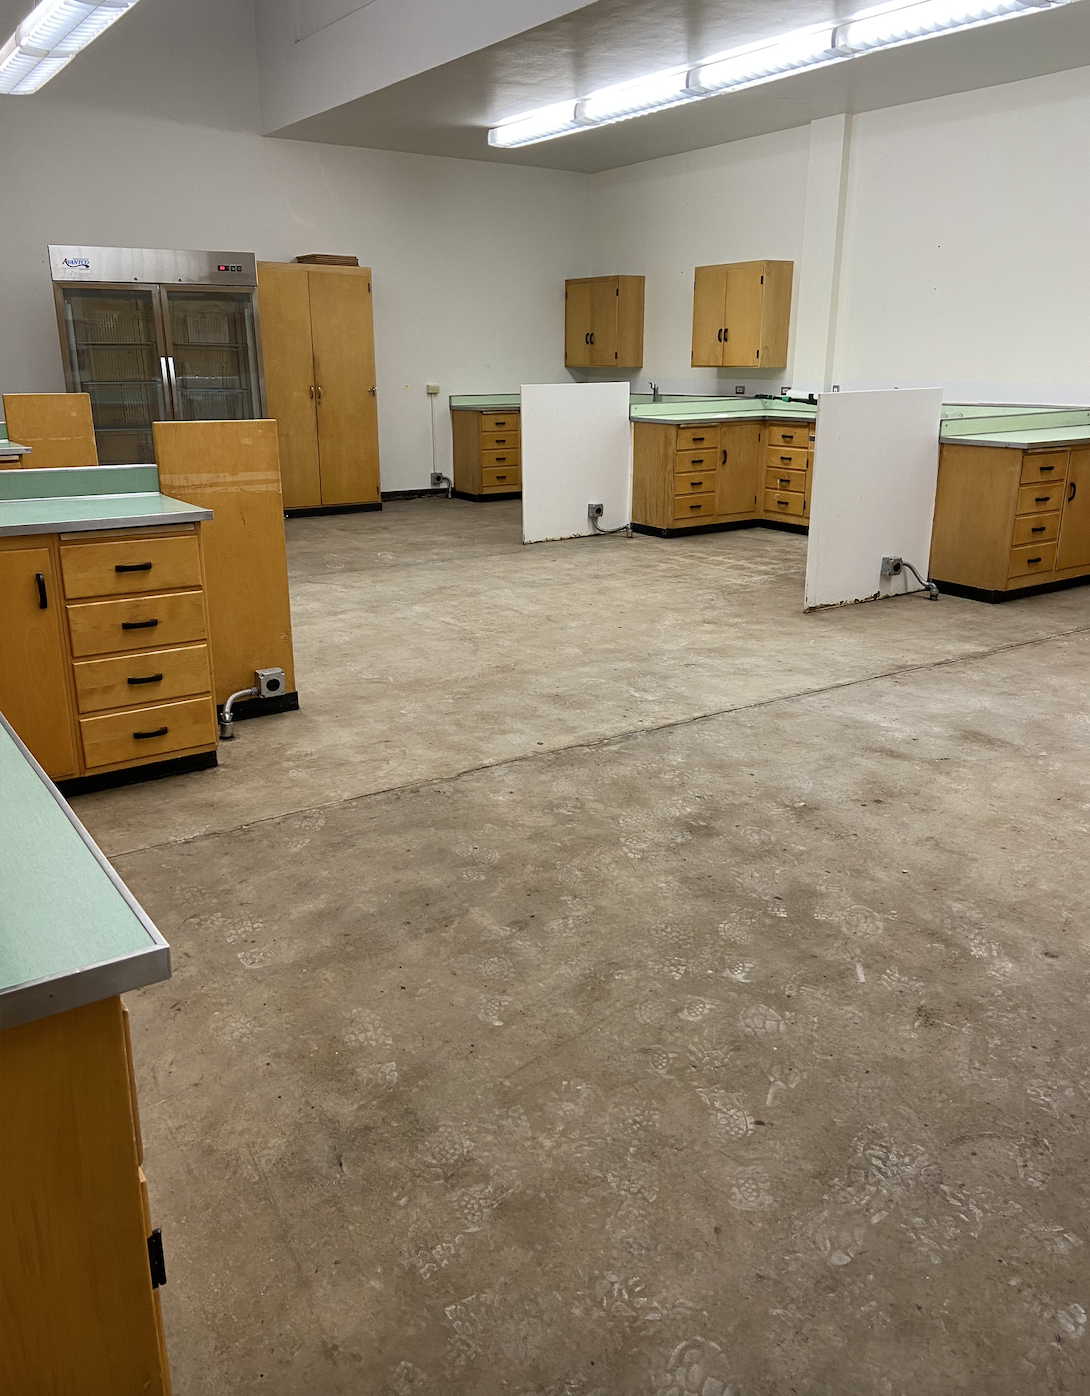 FACS Kitchen floor removed